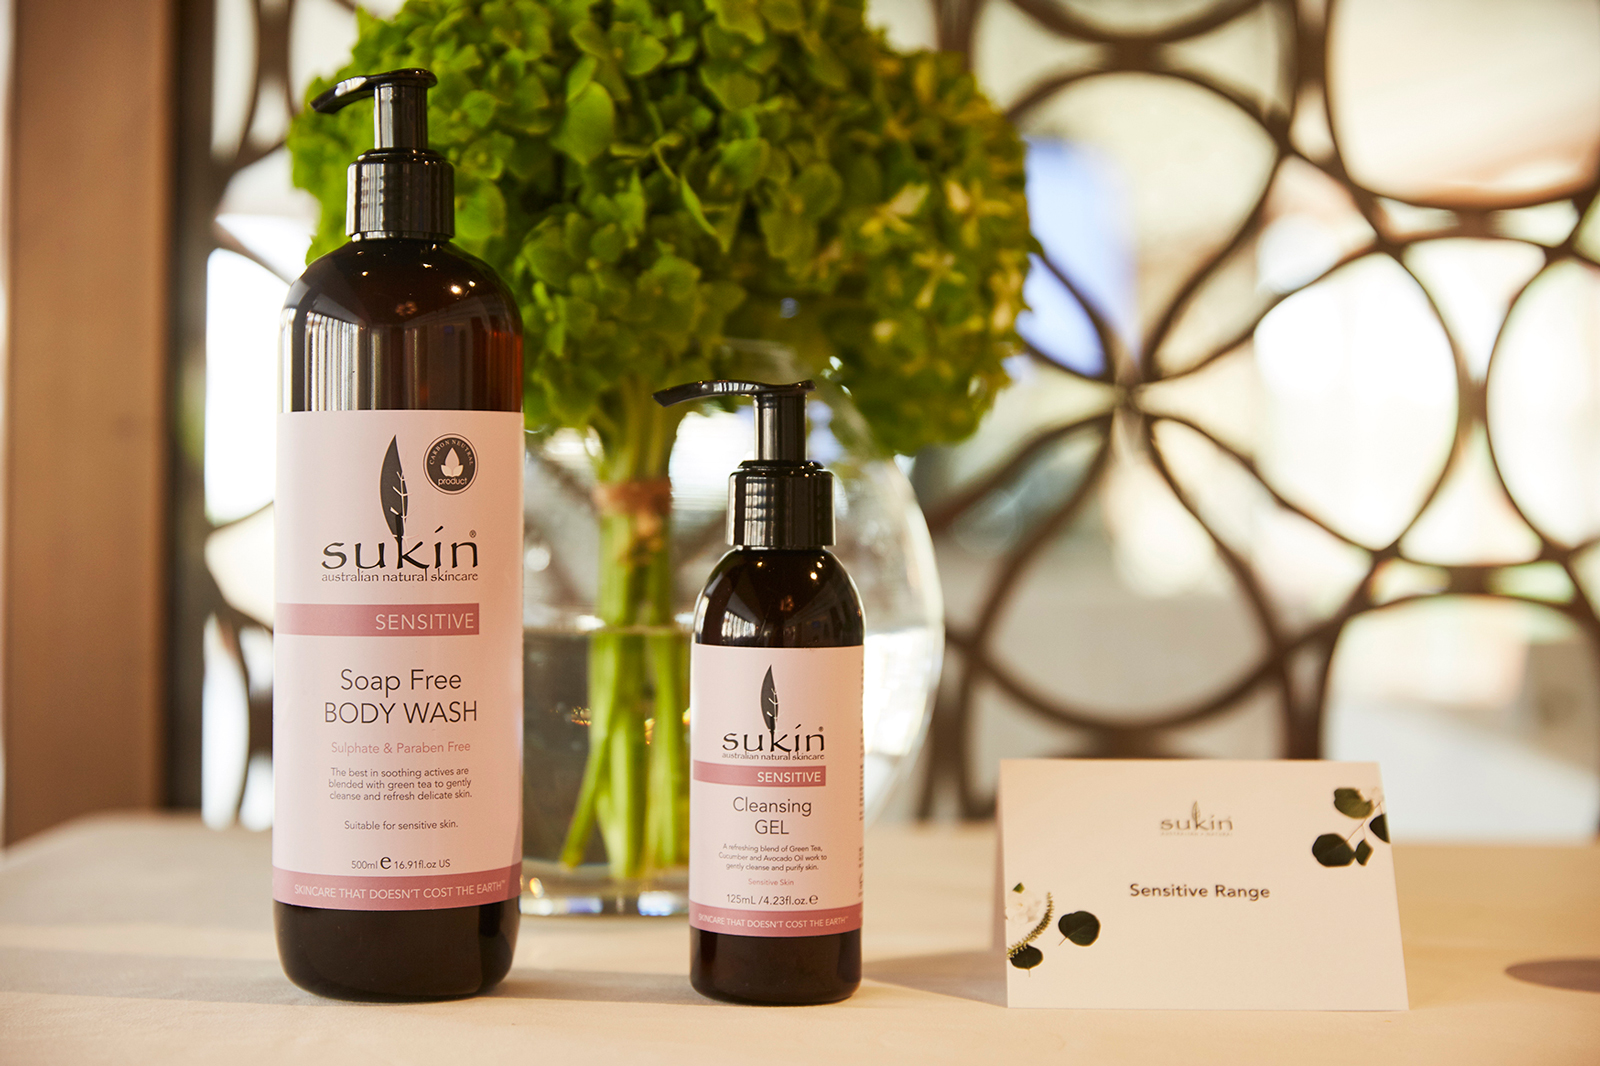 Sukin Product Launch, Dubai